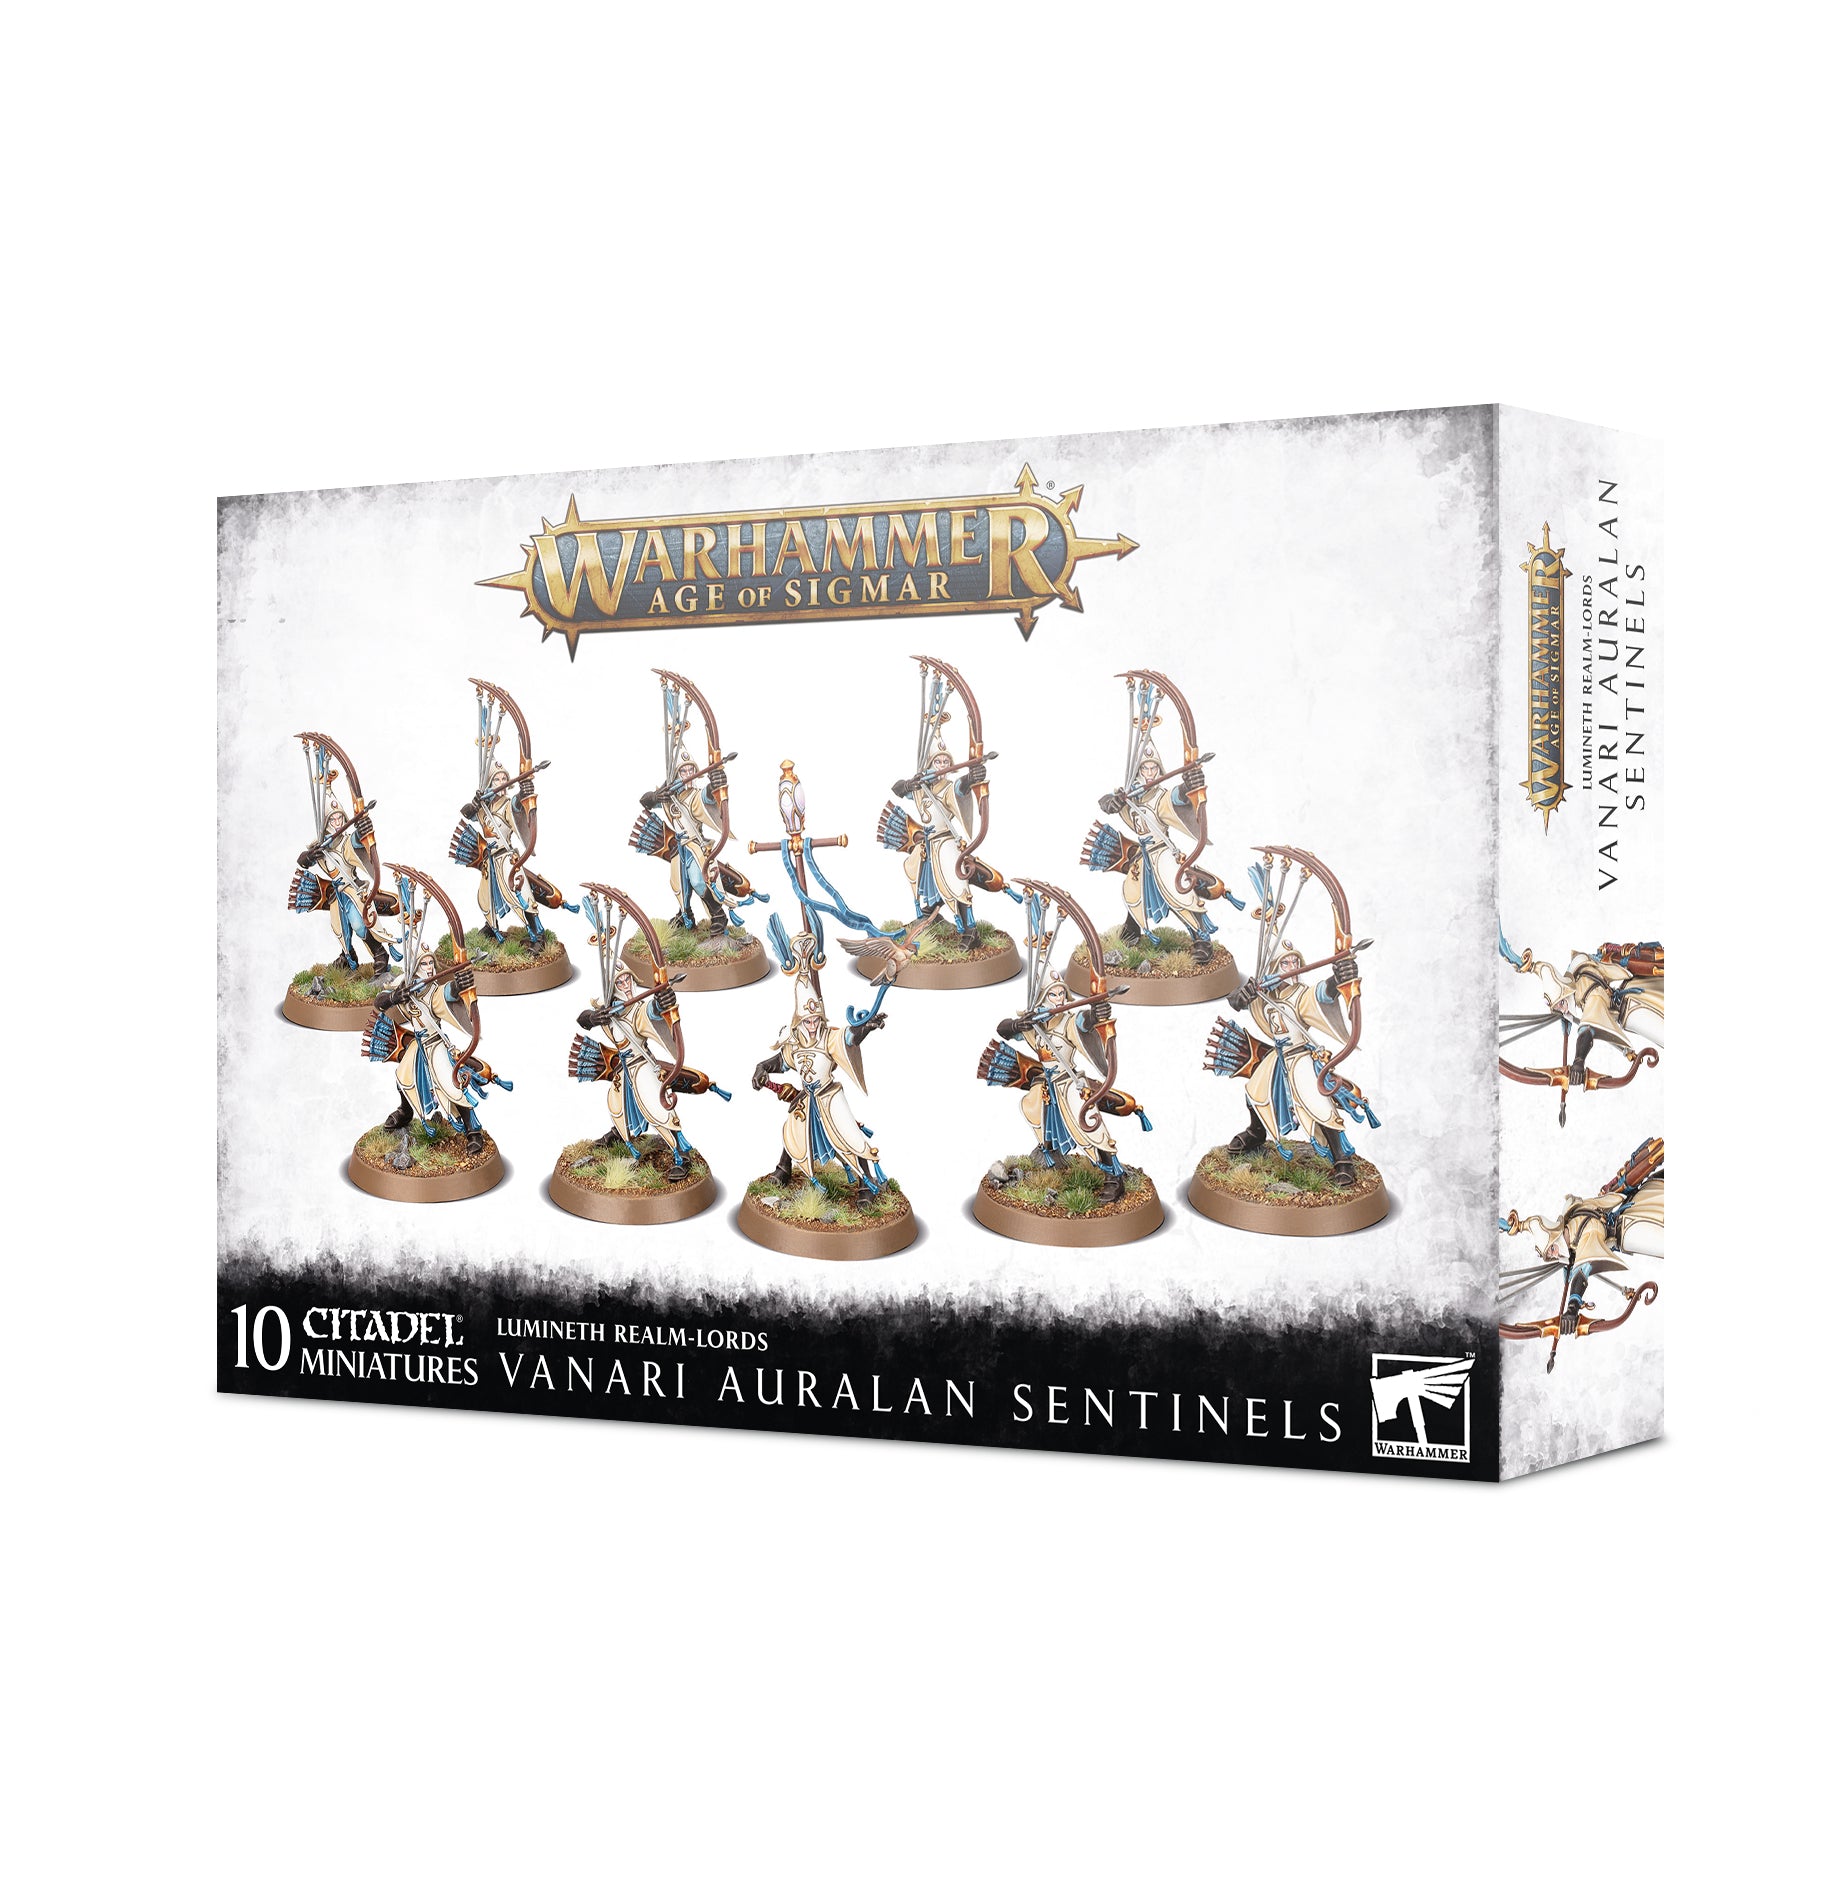 Lumineth Realm-Lords - Vanari Auralan Sentinels | RetroPlay Games